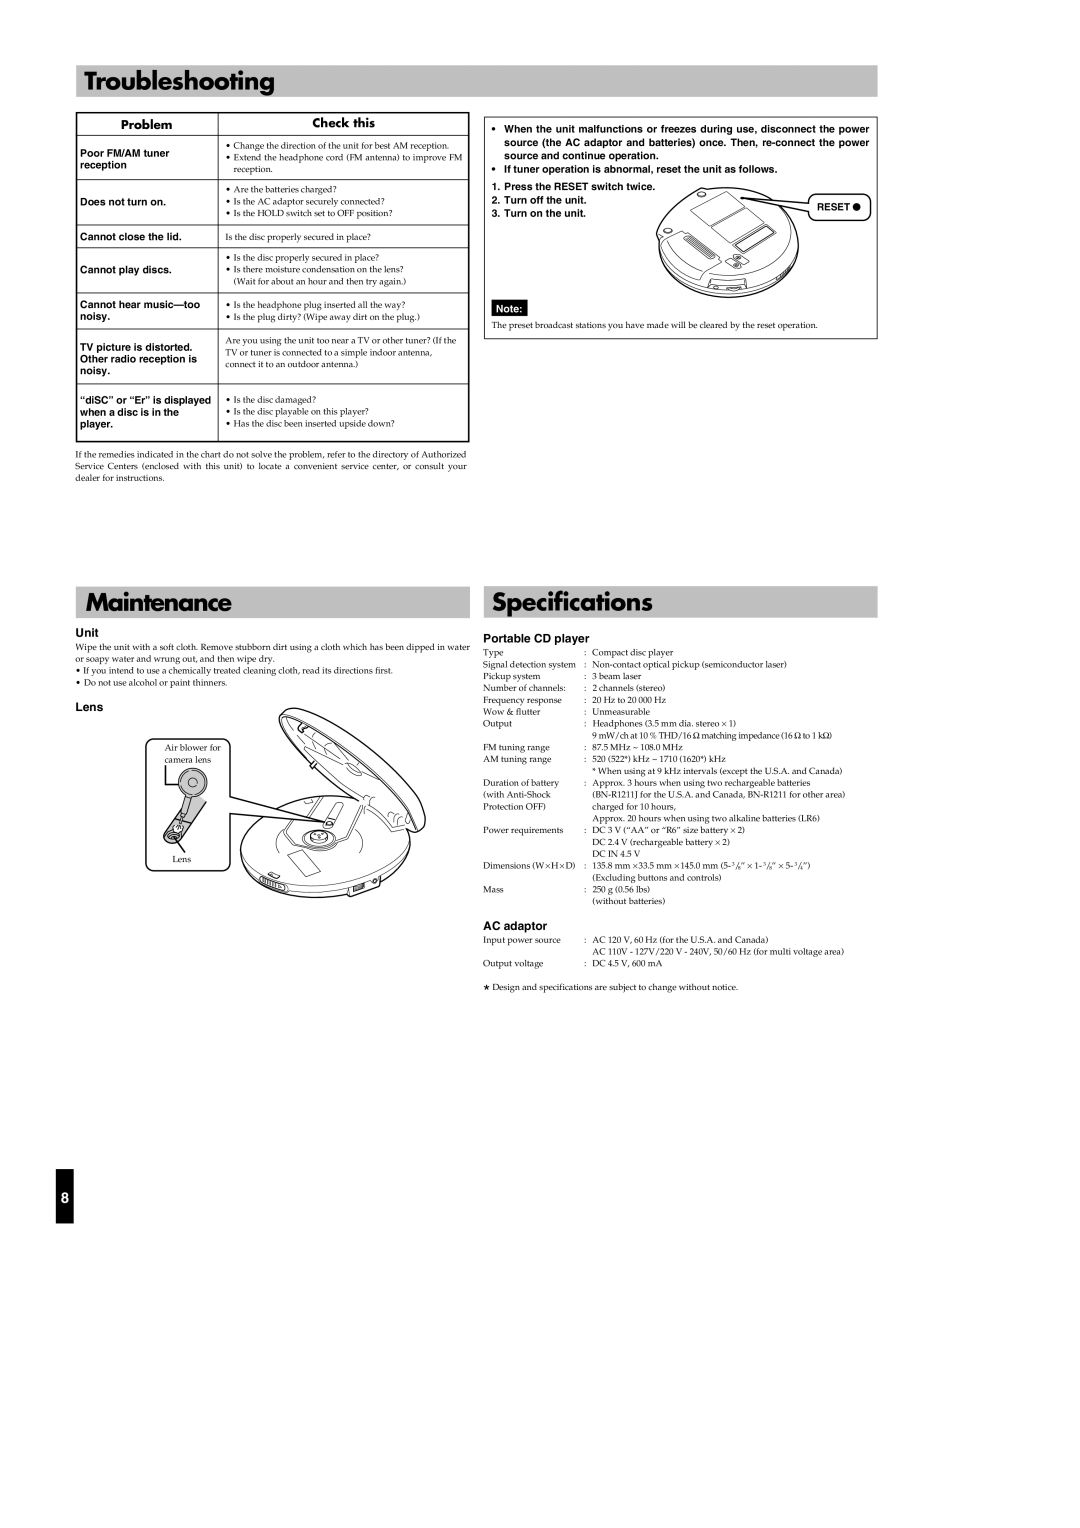 JVC XL-PR1BK manual Troubleshooting, Maintenance, Specifications, Problem, Check this 